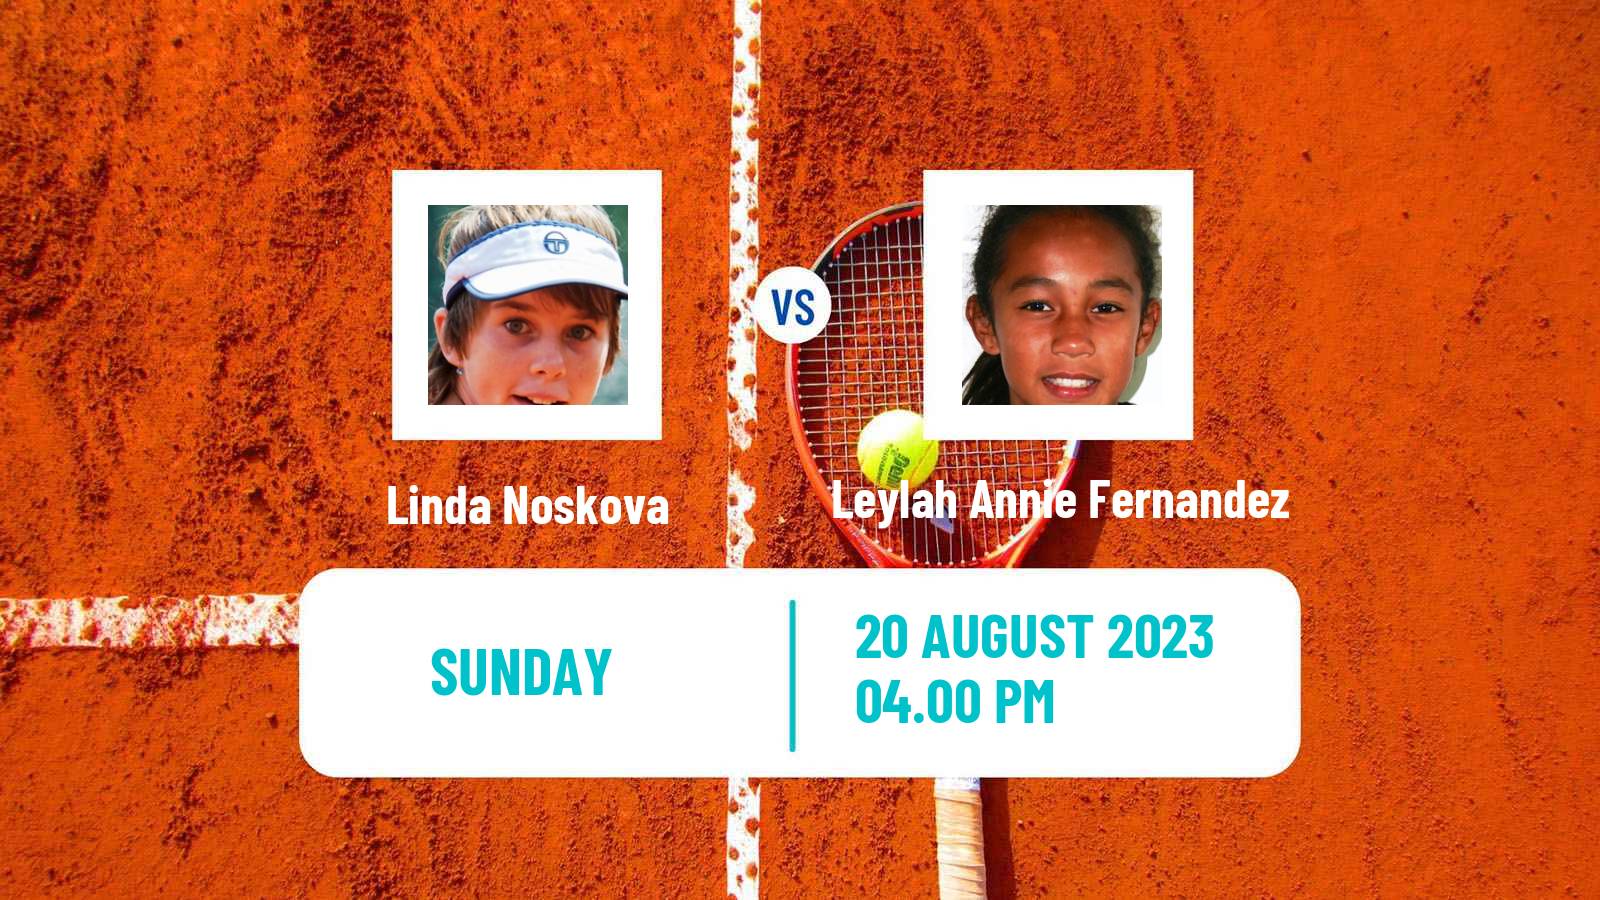 Tennis WTA Cleveland Linda Noskova - Leylah Annie Fernandez